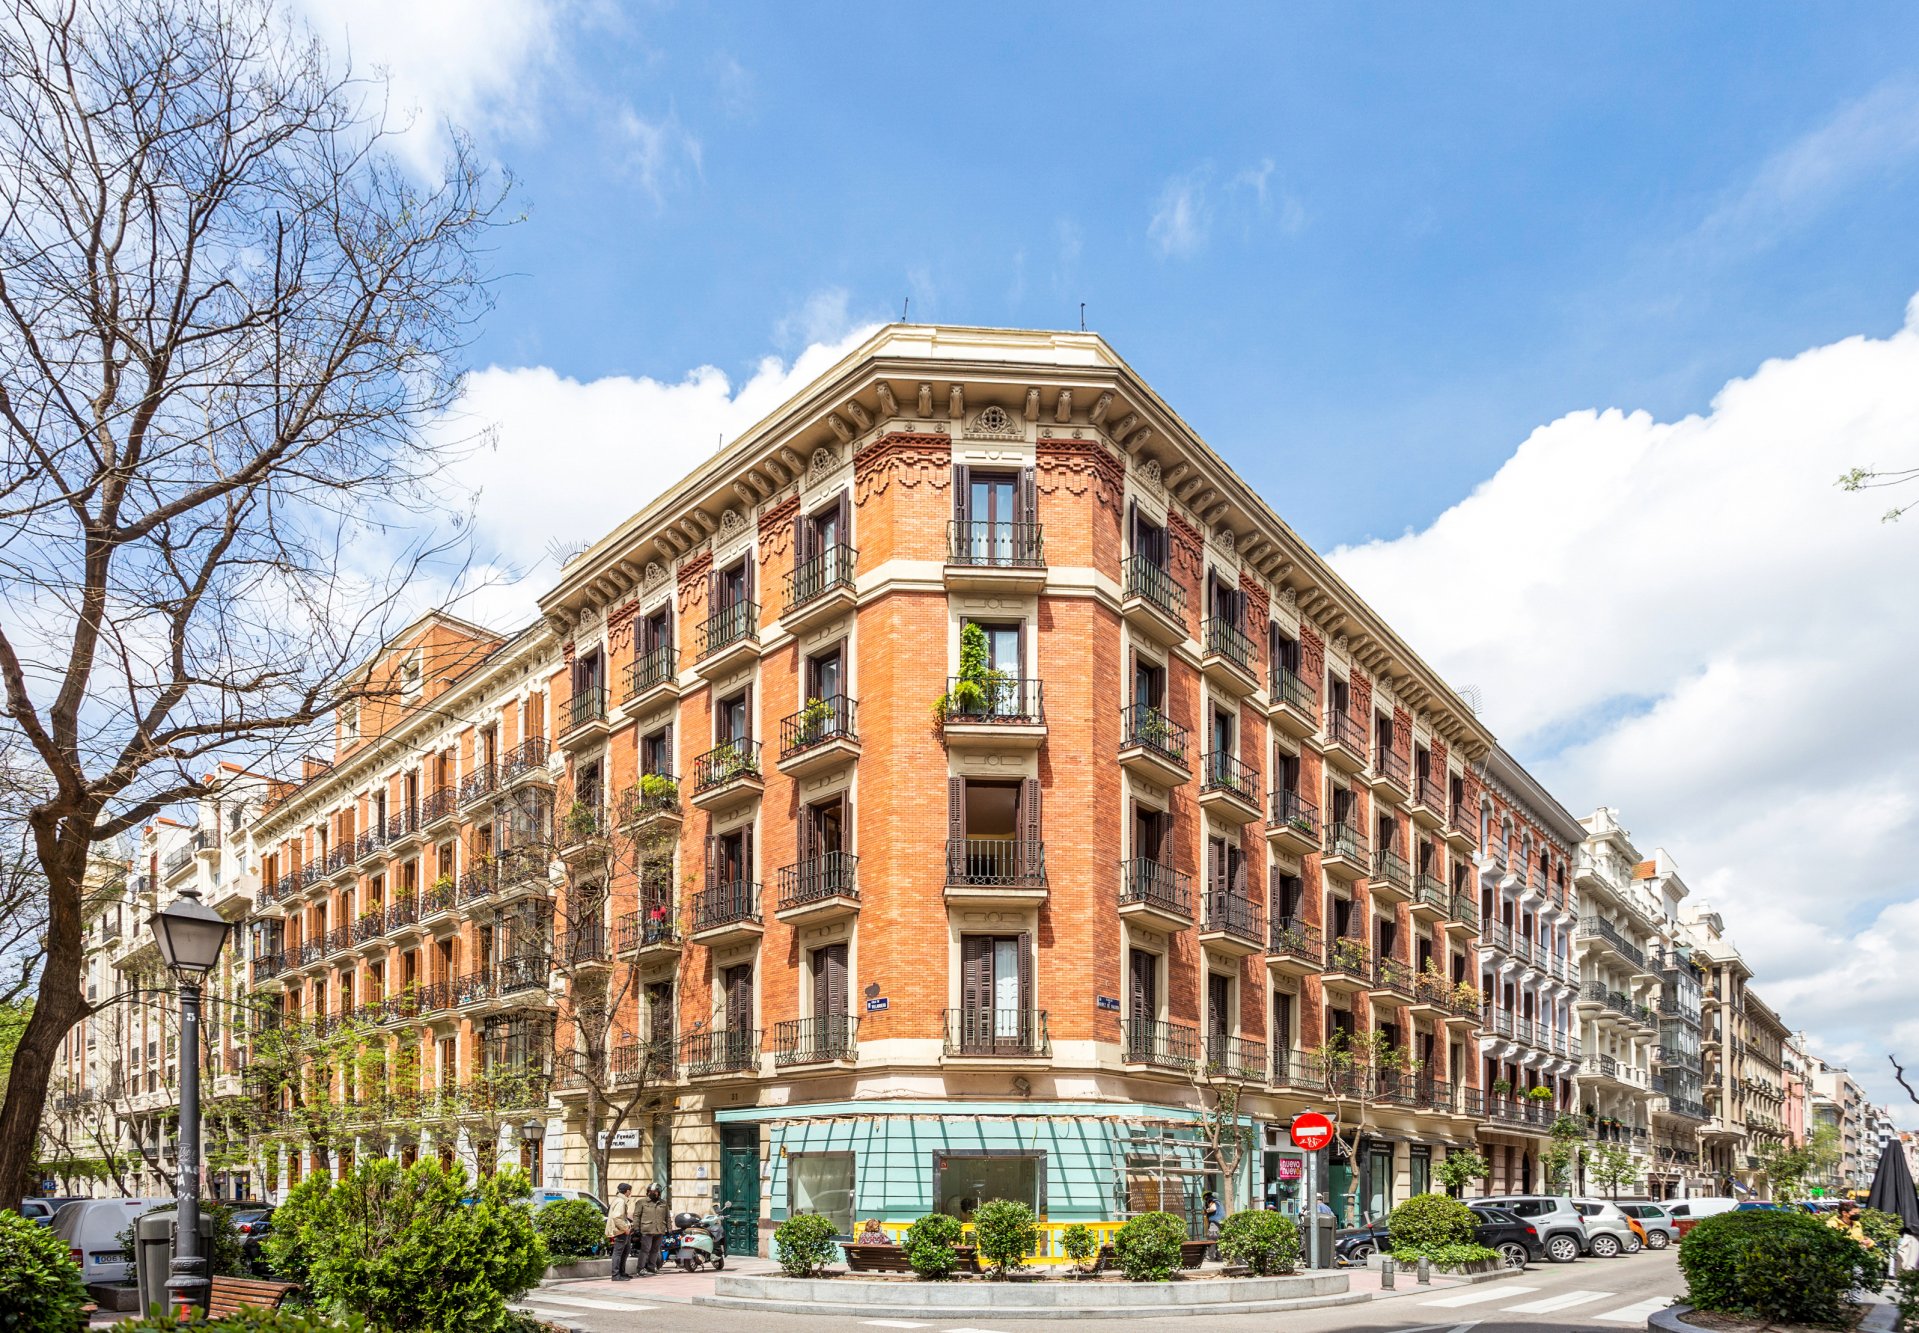 Ad Rental Apartment Madrid Recoletos 28001 Refl1196ma 5514